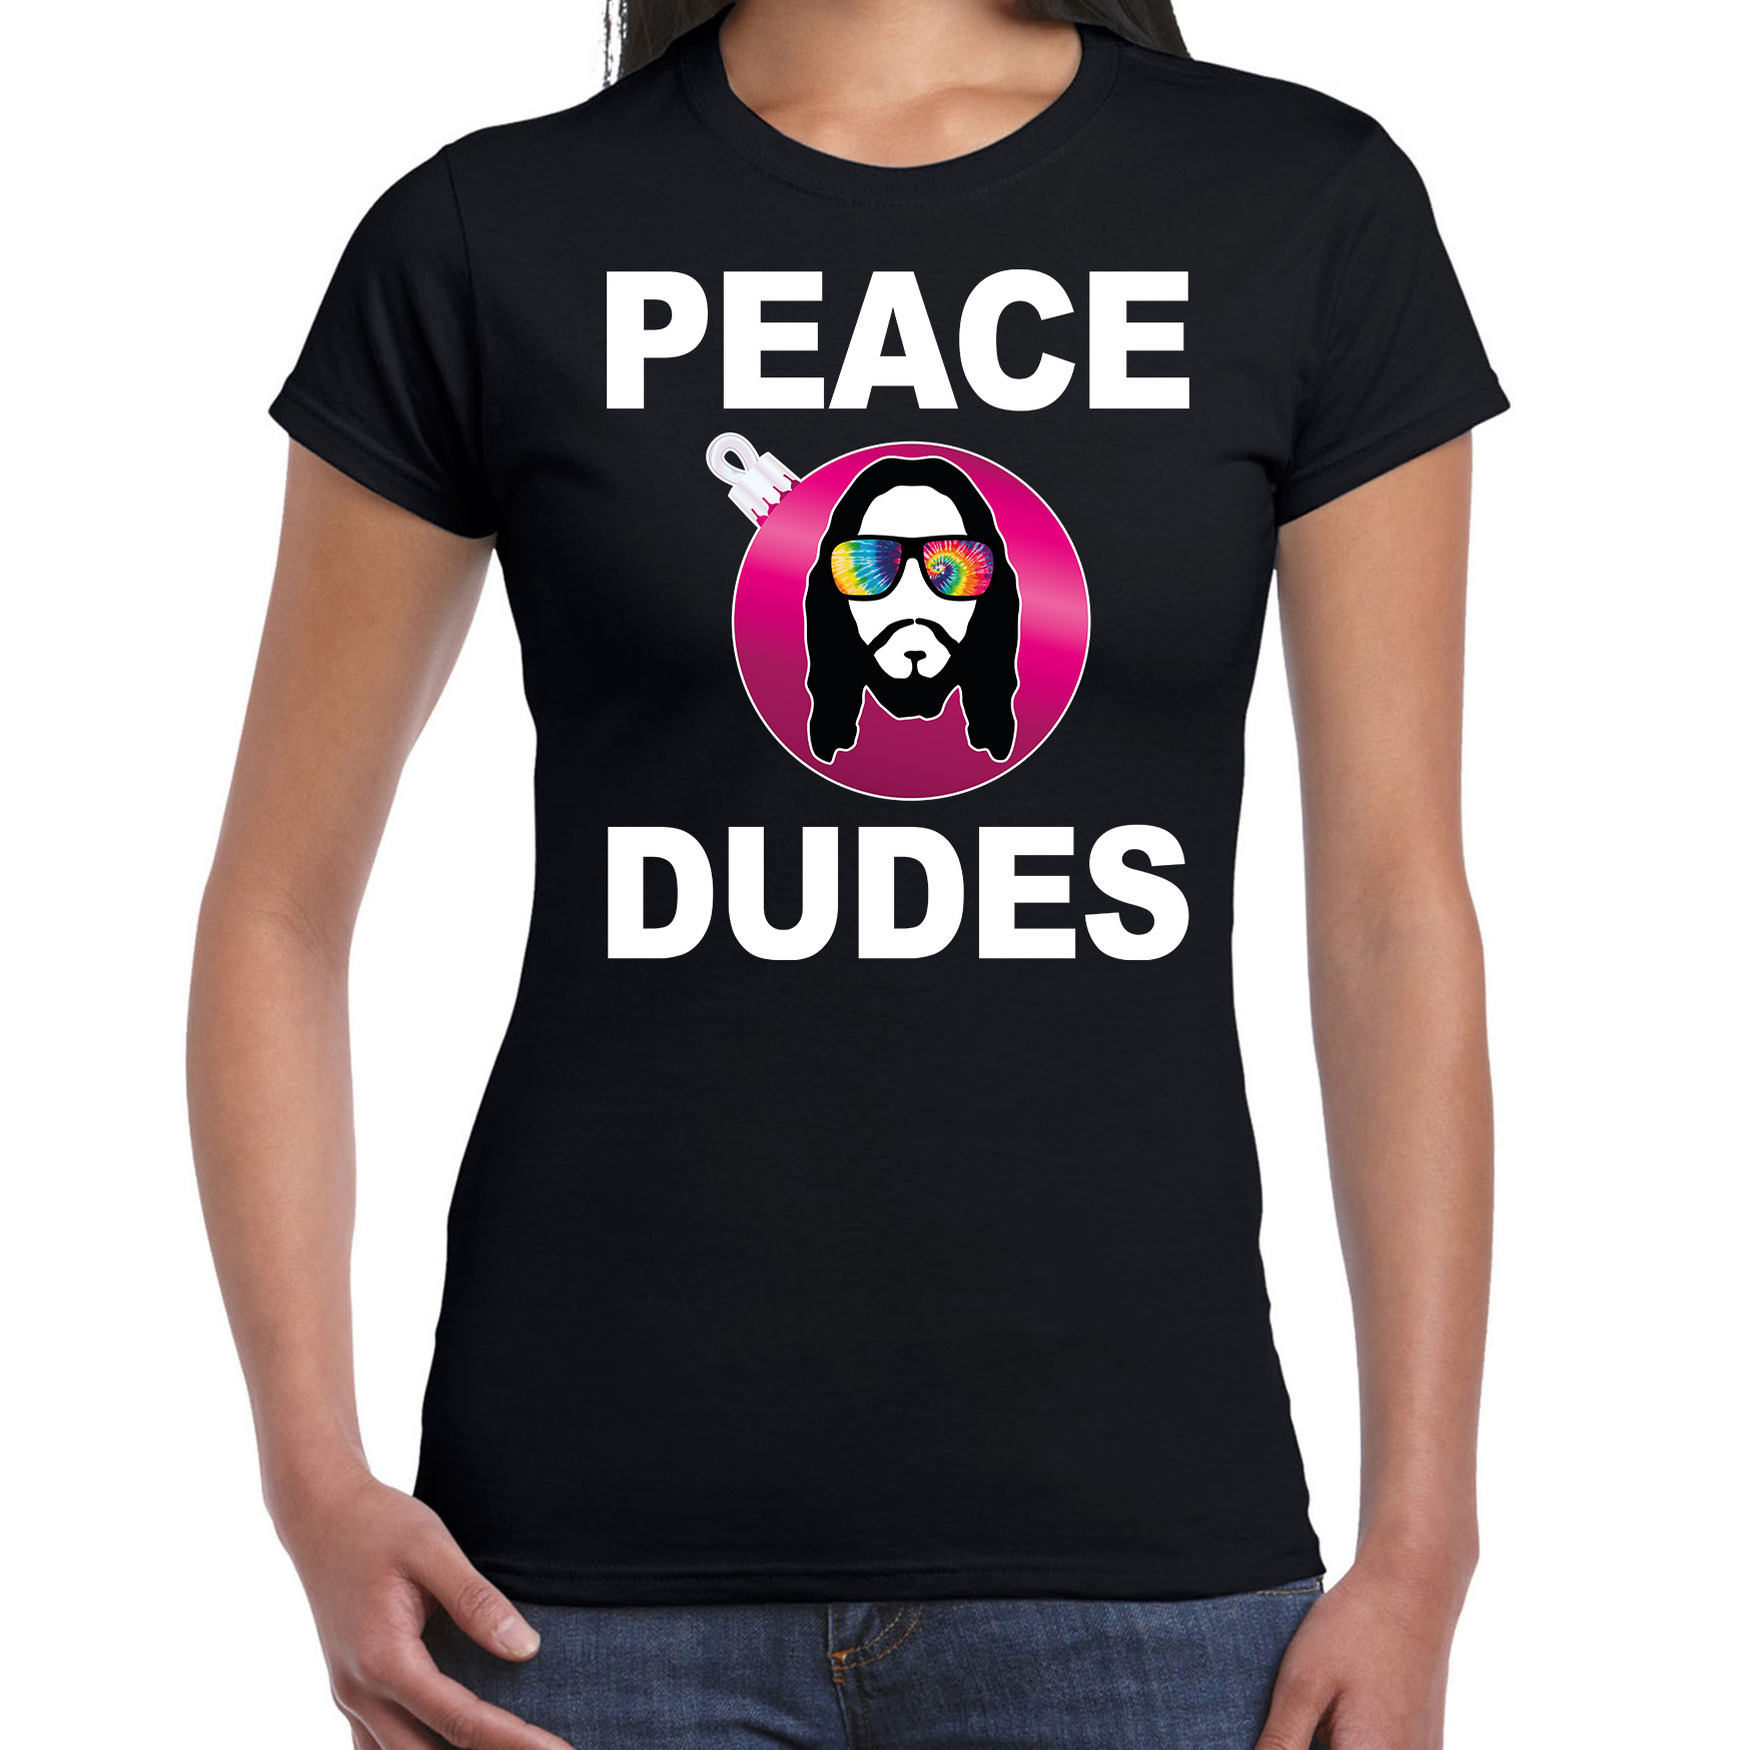 Hippie jezus Kerstbal shirt-Kerst outfit peace dudes zwart voor dames